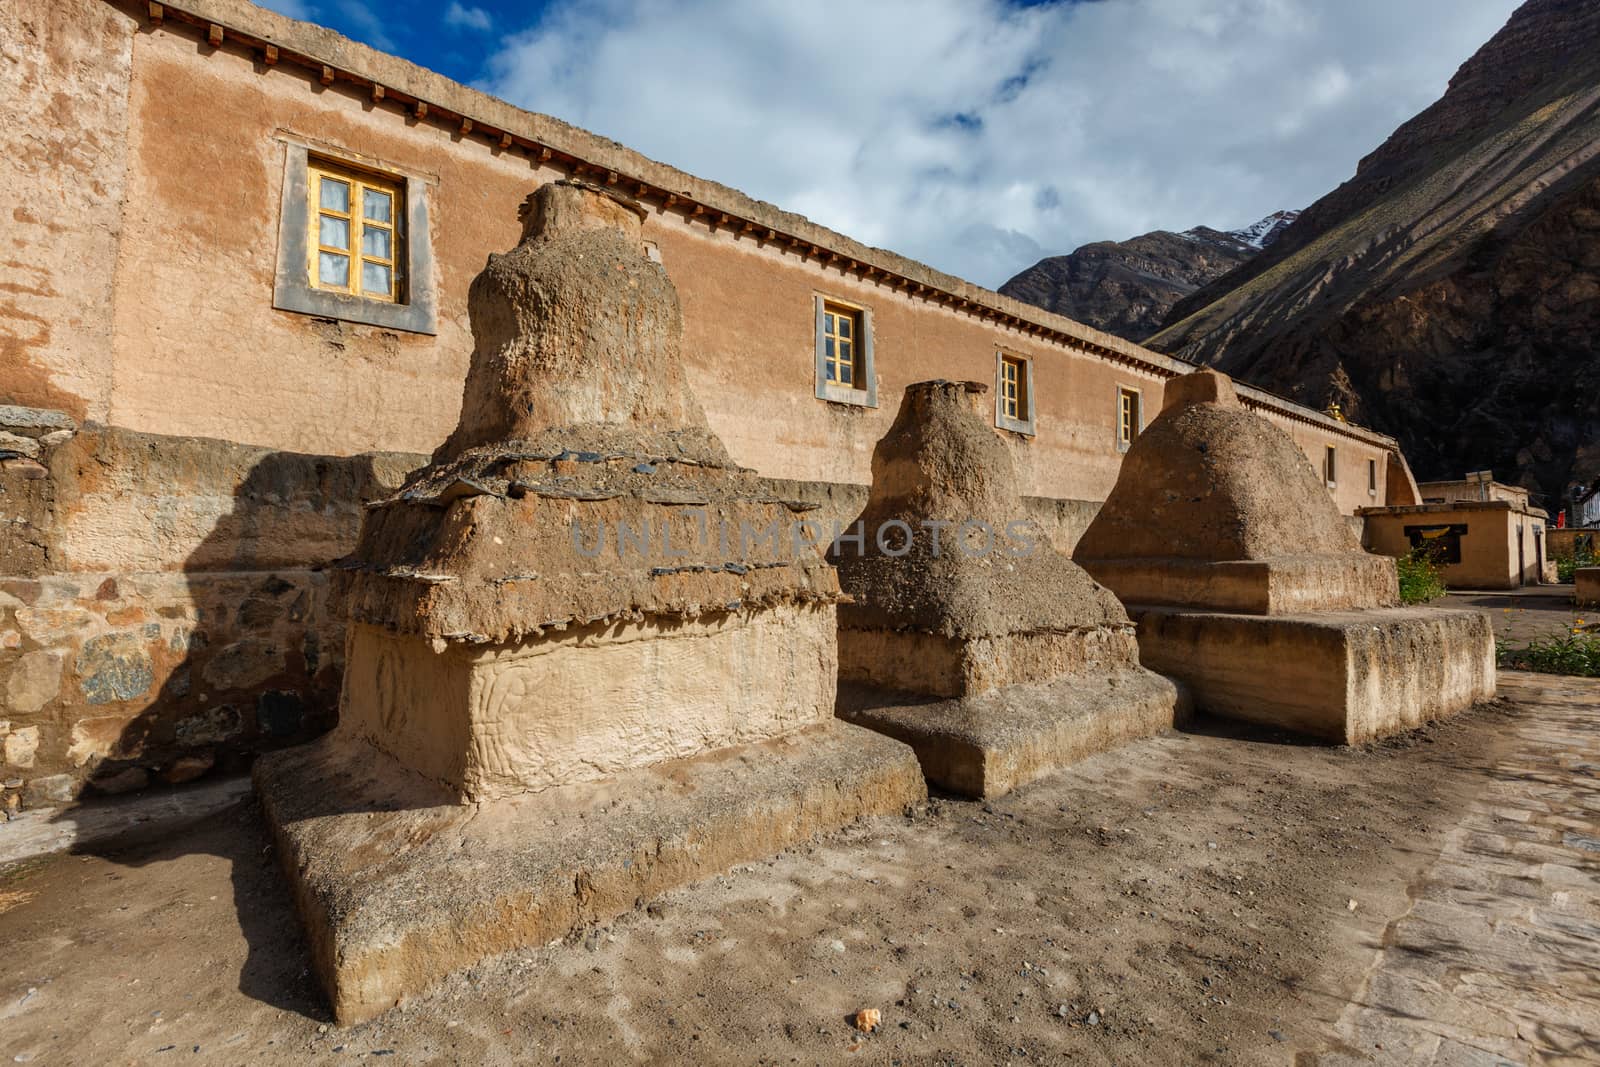 Tabo monastery in Tabo village, Spiti Valley, Himachal Pradesh, India by dimol